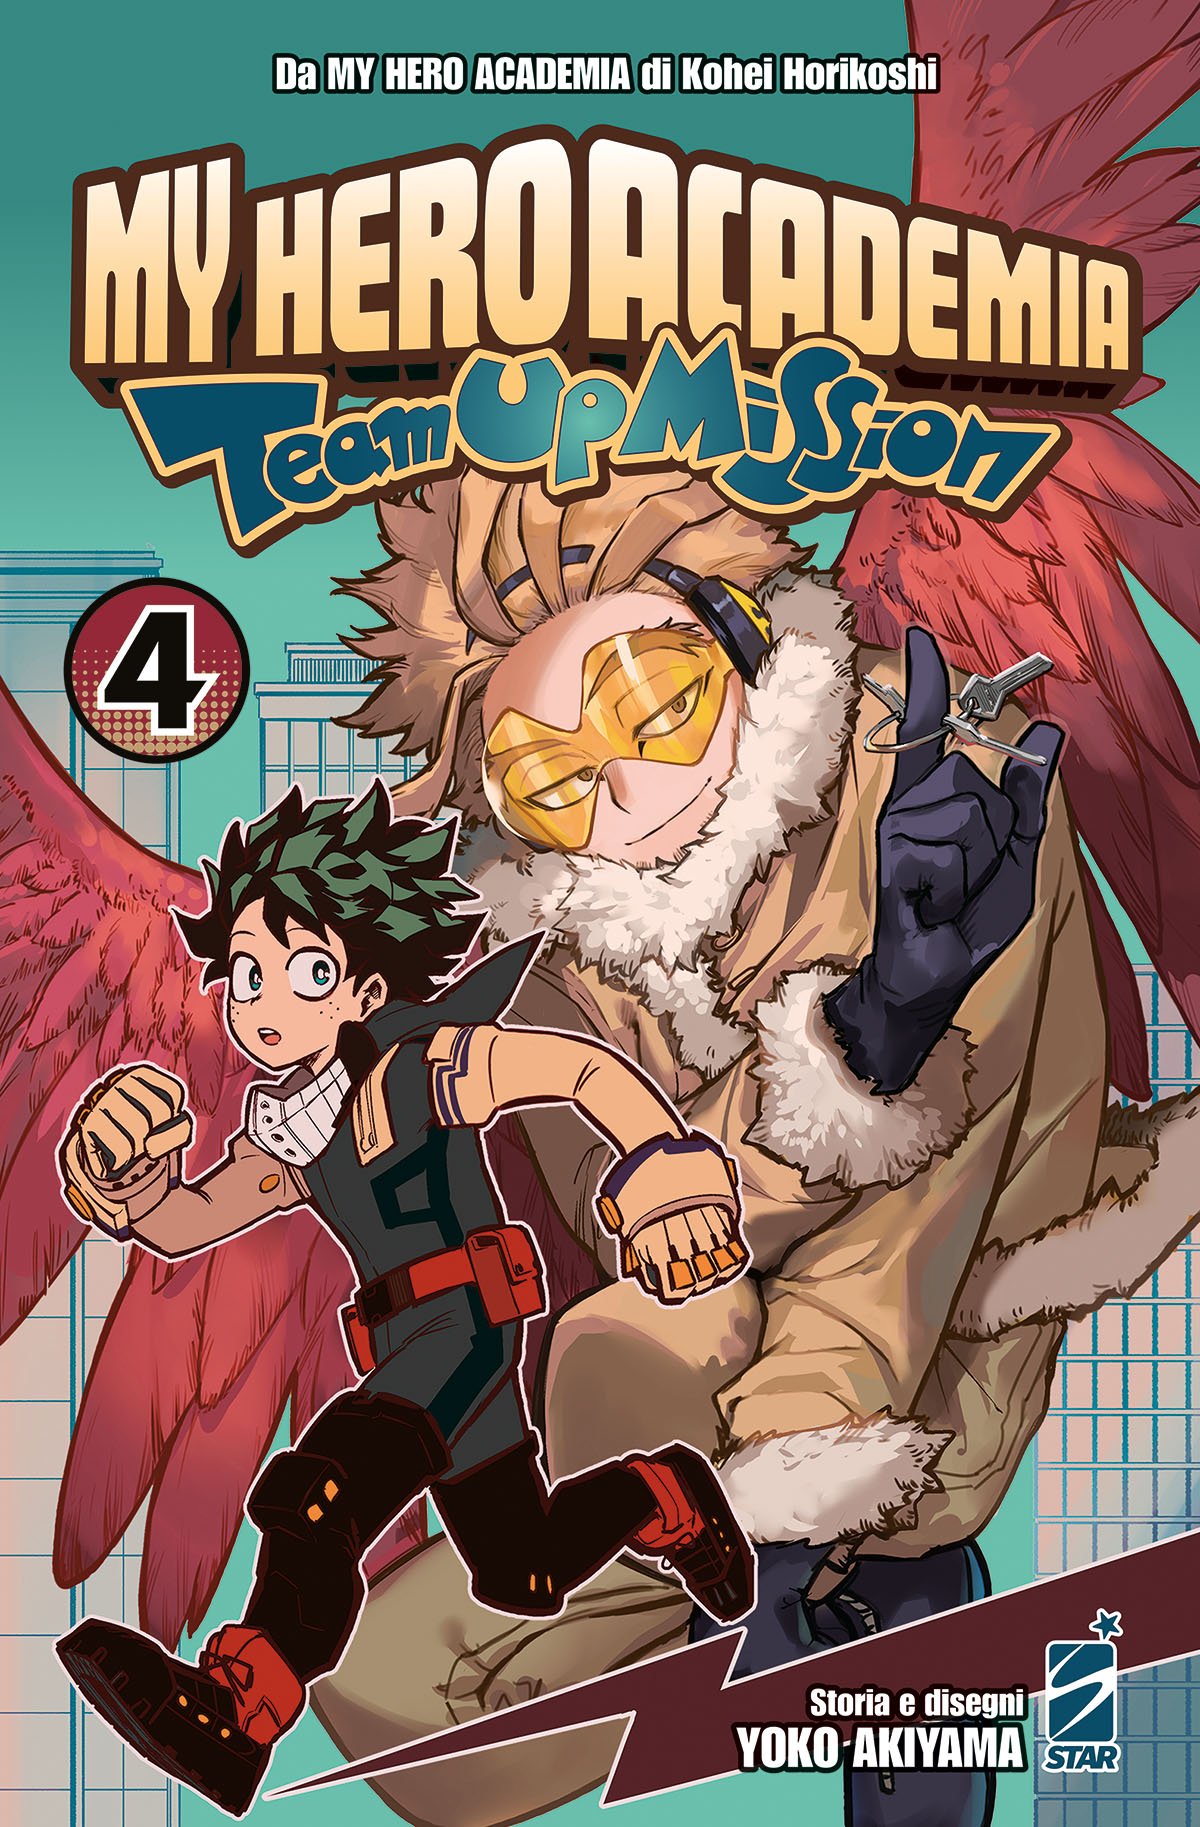 My Hero Academia Team Up Mission 4, parmi les sorties mangas Star Comics du 14 juin 2023.